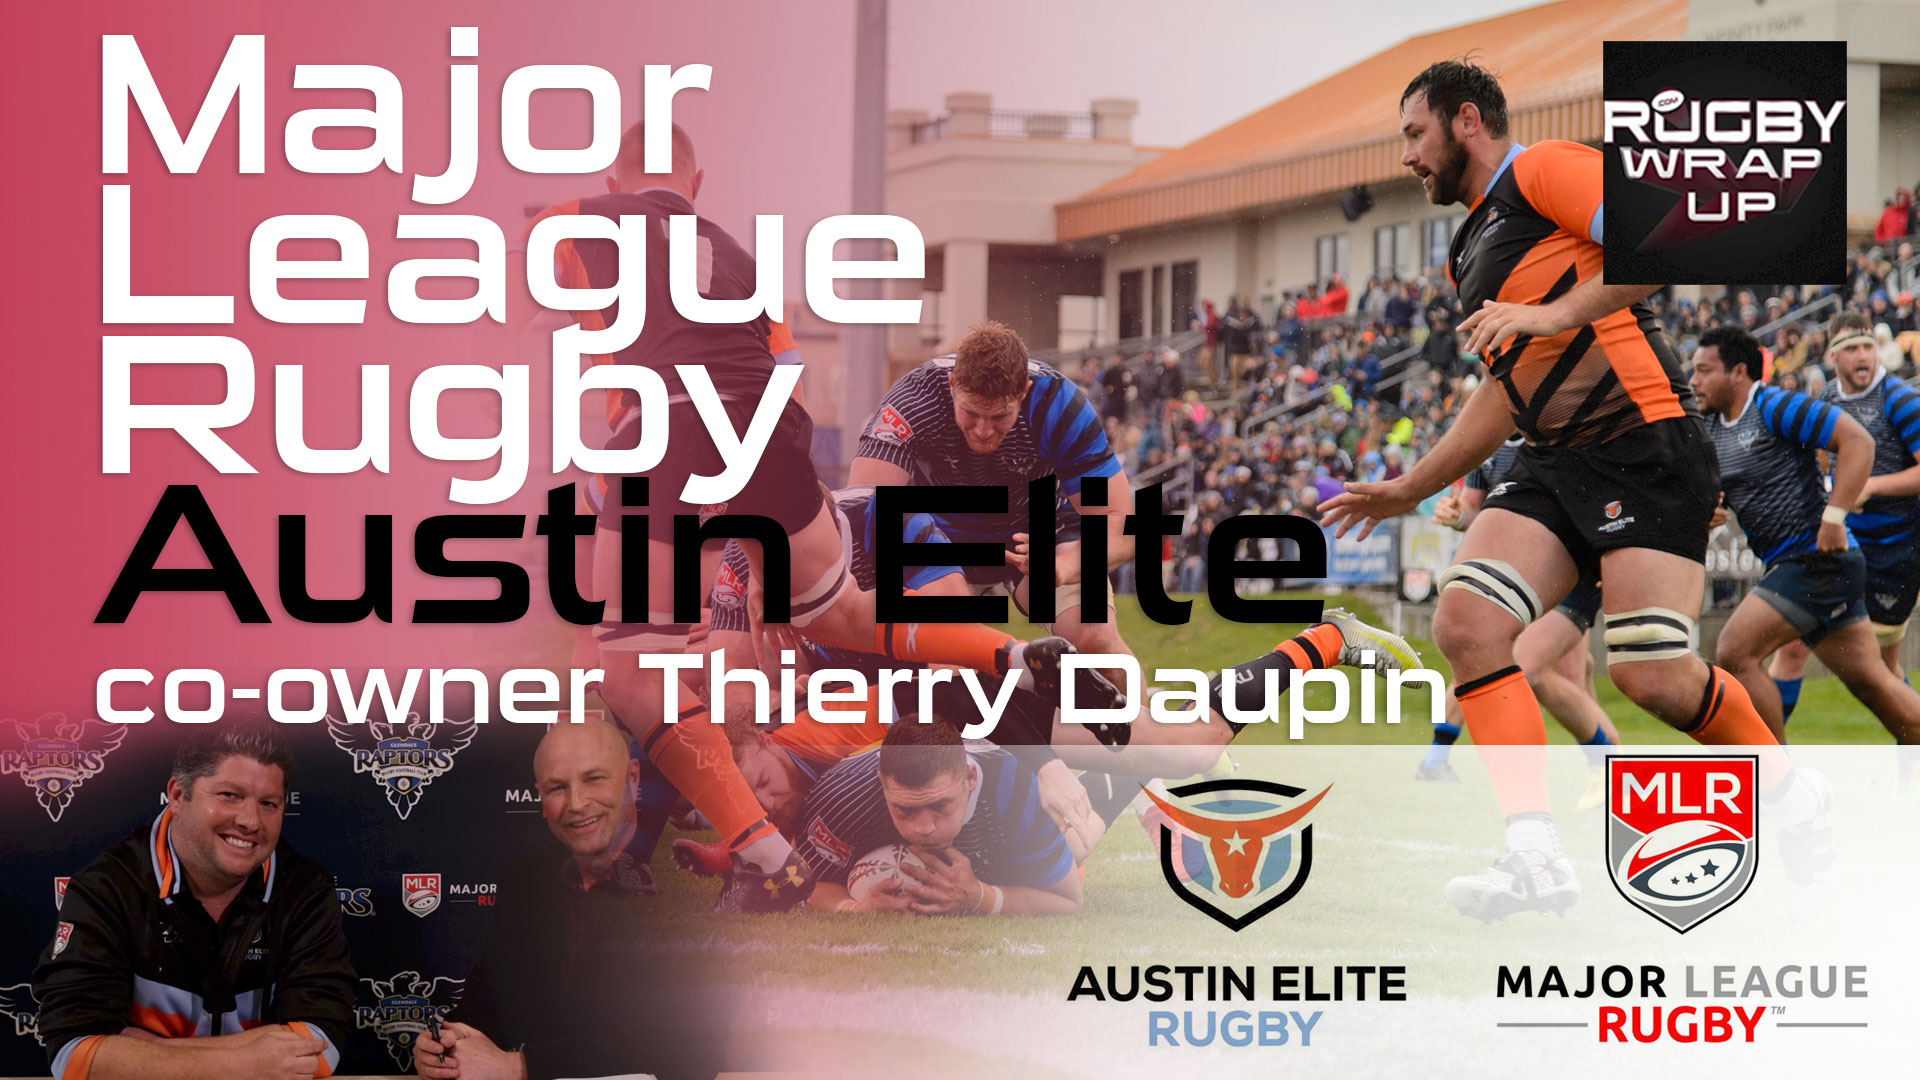 Thierry Daupin, Austin Elite, Rugby_Wrap_Up, Matt_McCarthy